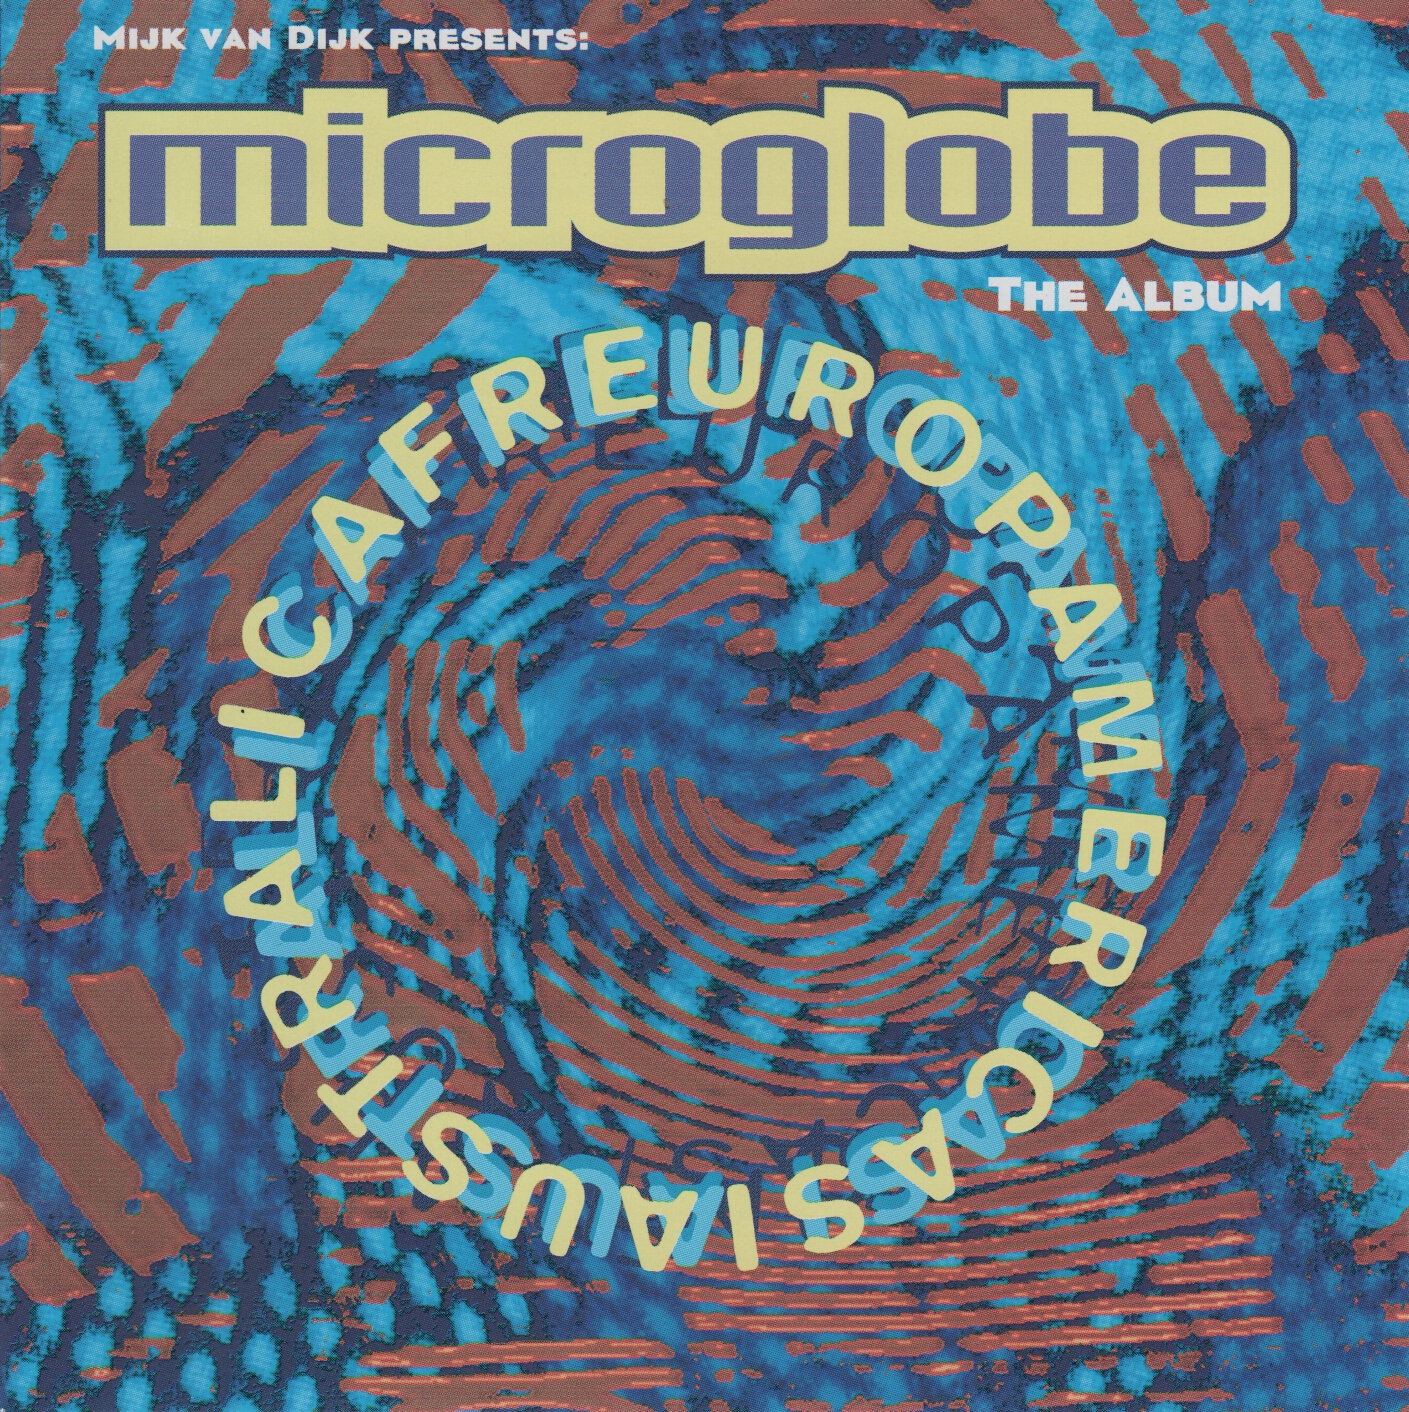 Microglobe - Afreuropamericasiaustralica